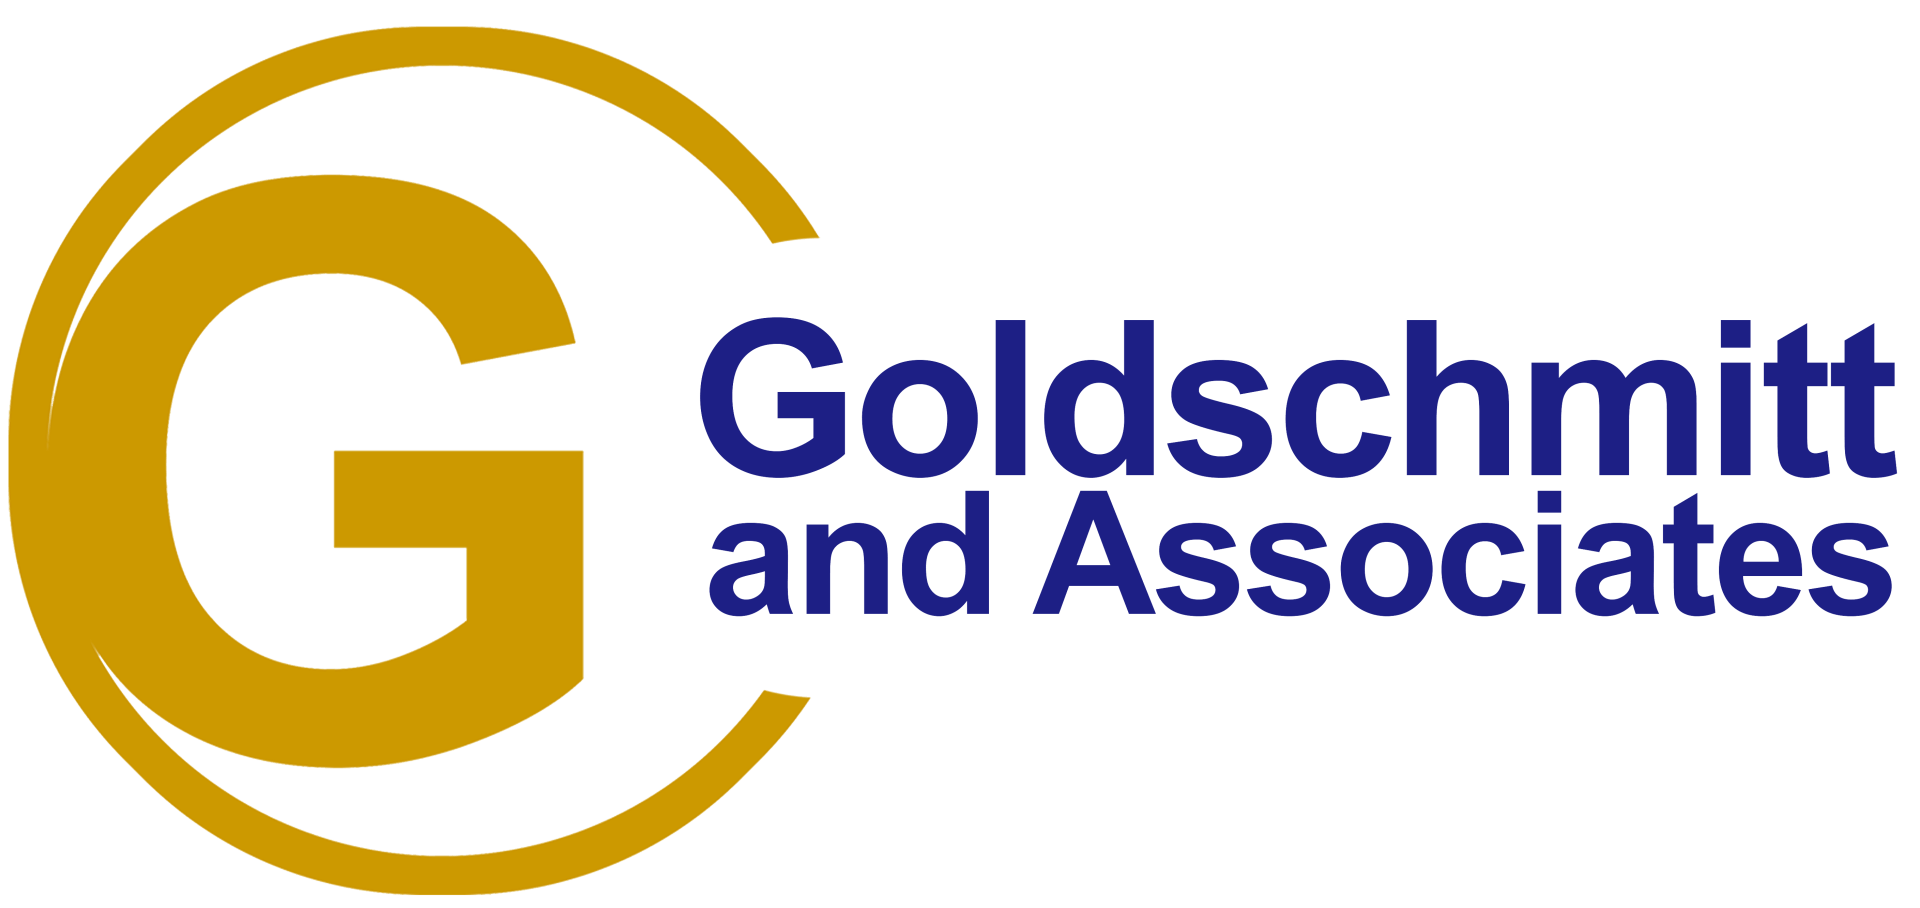 company logo: Uppercase gold G inside a semi-circle next to blue text: Goldschmitt and Associates